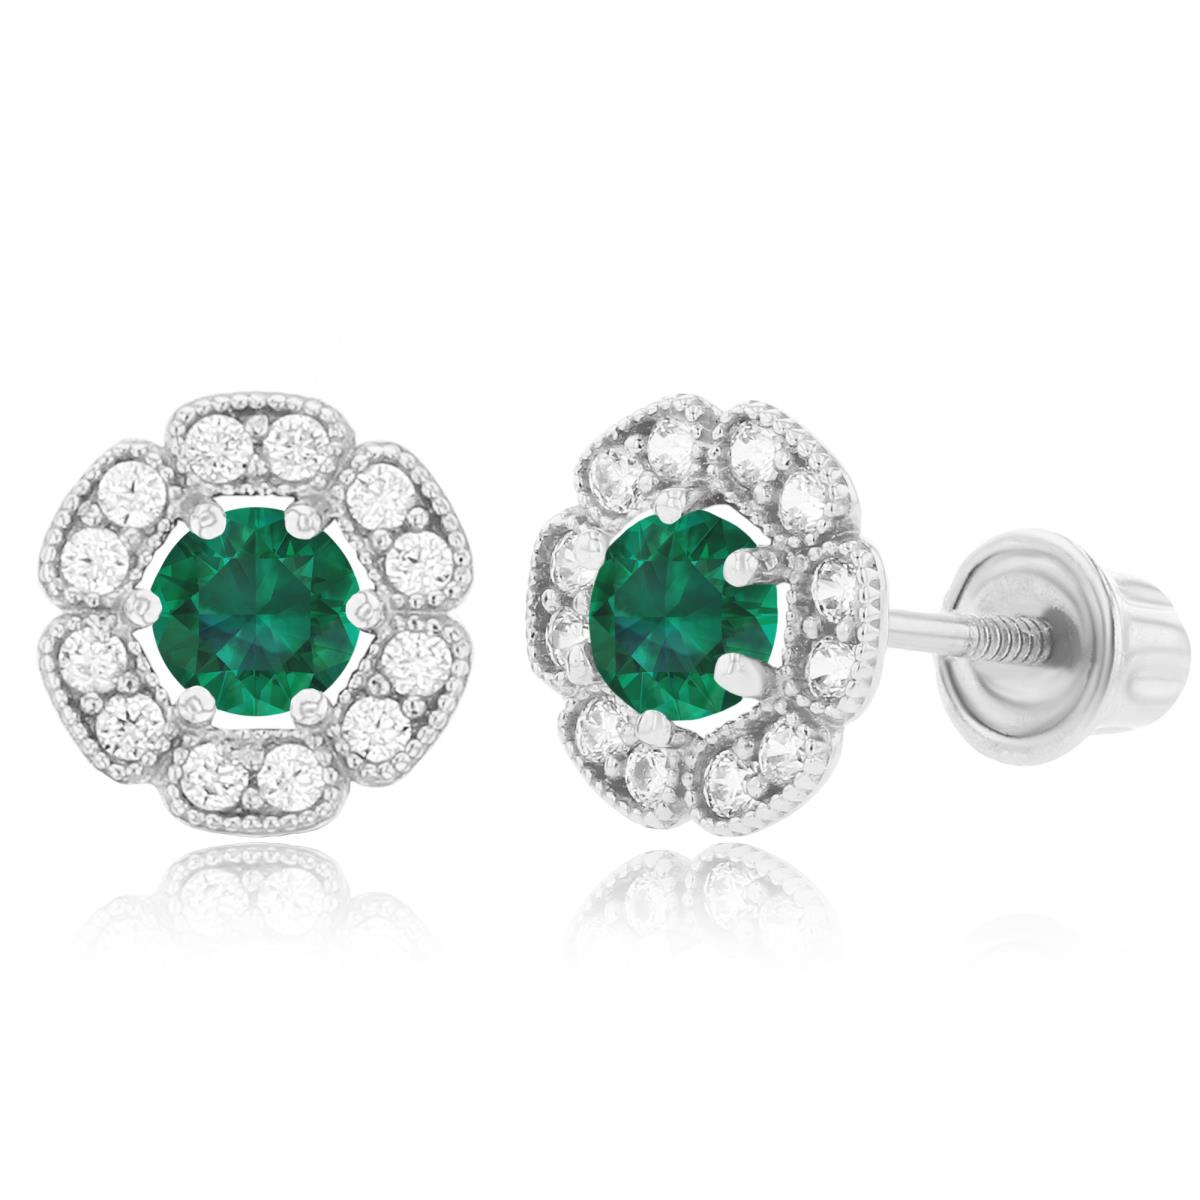 14K White Gold 3mm Created Emerald & 1mm Created White Sapphire Flower Screwback Earrings